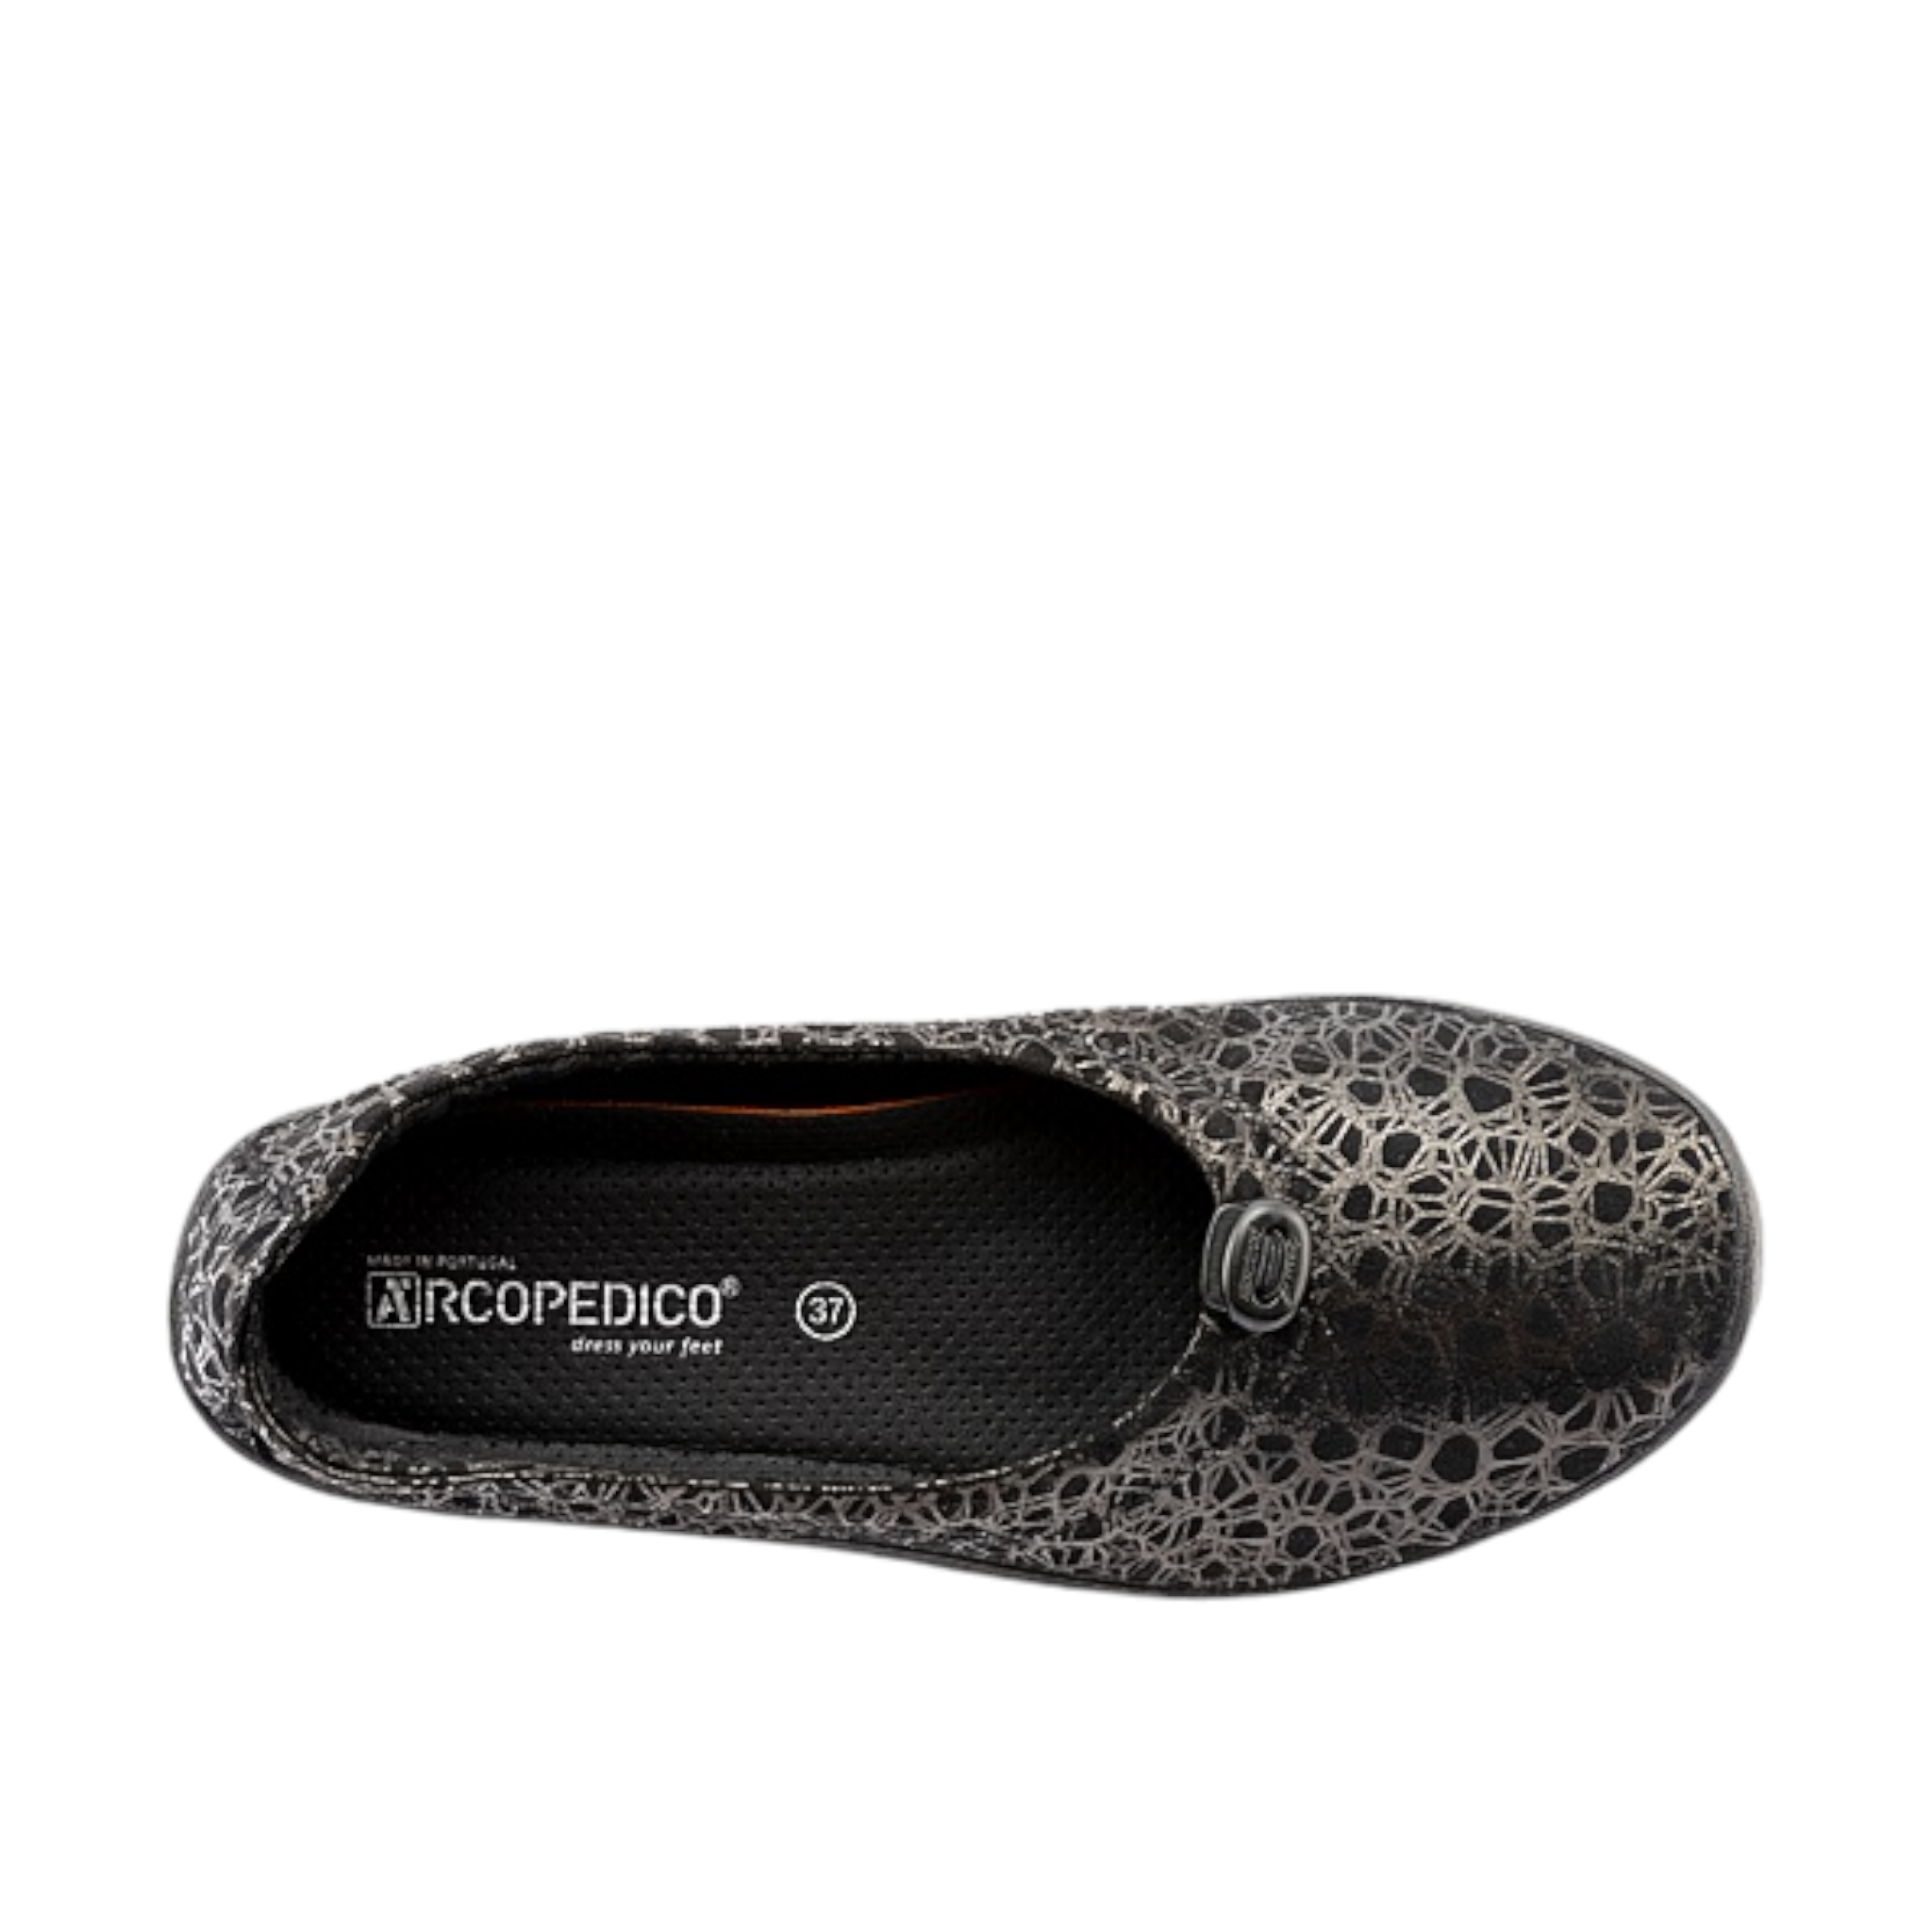 L14 - shoe&amp;me - Arcopedico - Shoe - Shoes, Womens